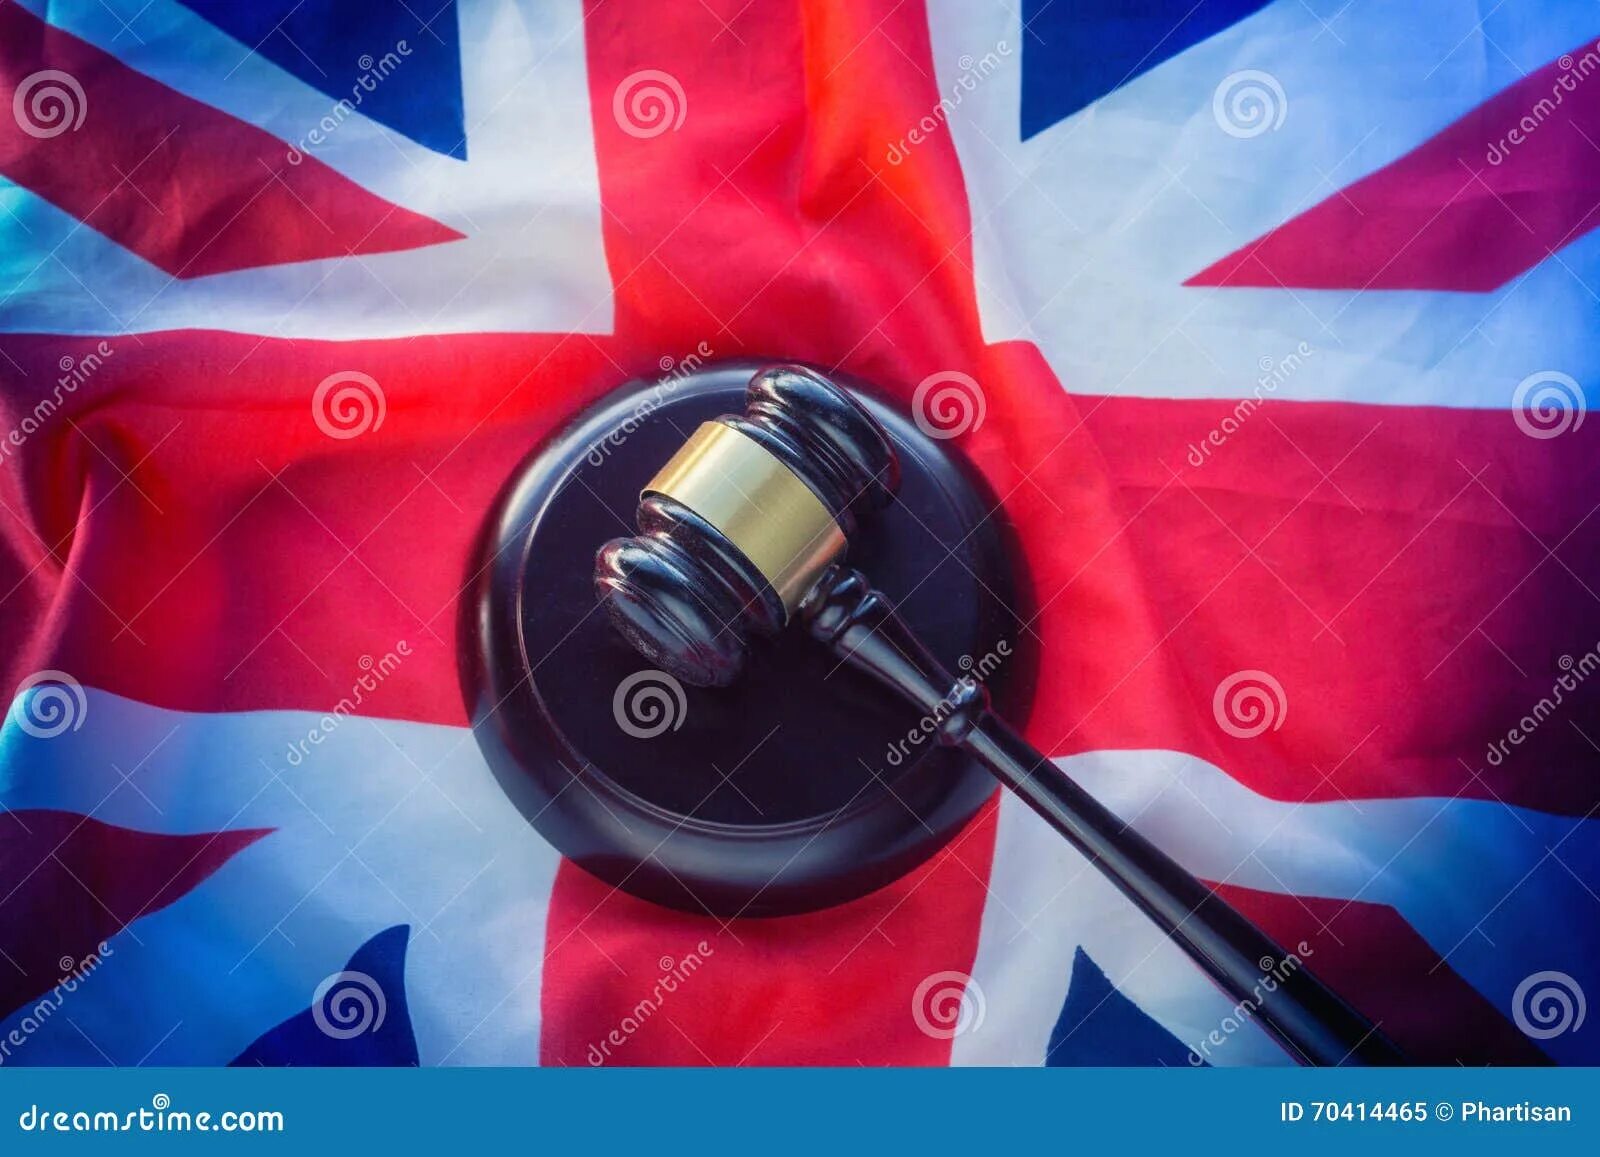 Britain law